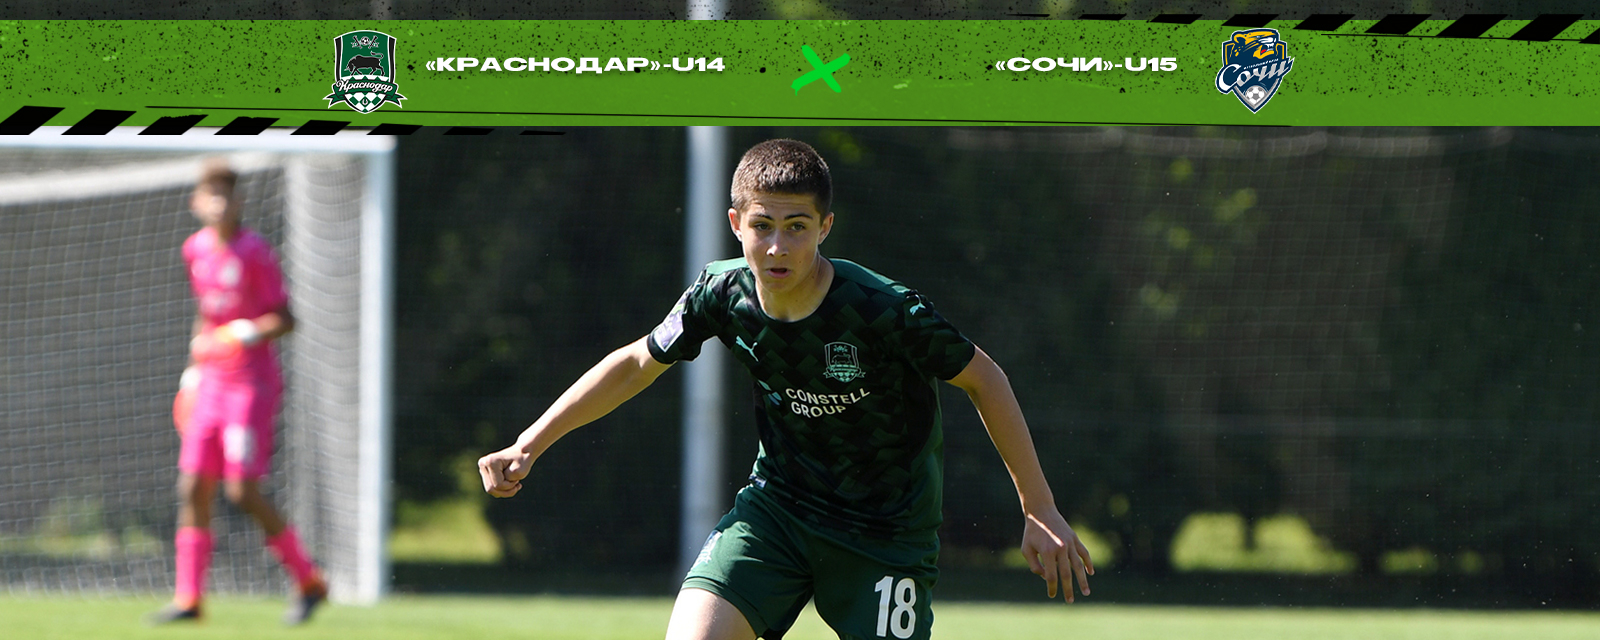 Видеотрансляция матча «Краснодар»-U14 - «Сочи»-U15